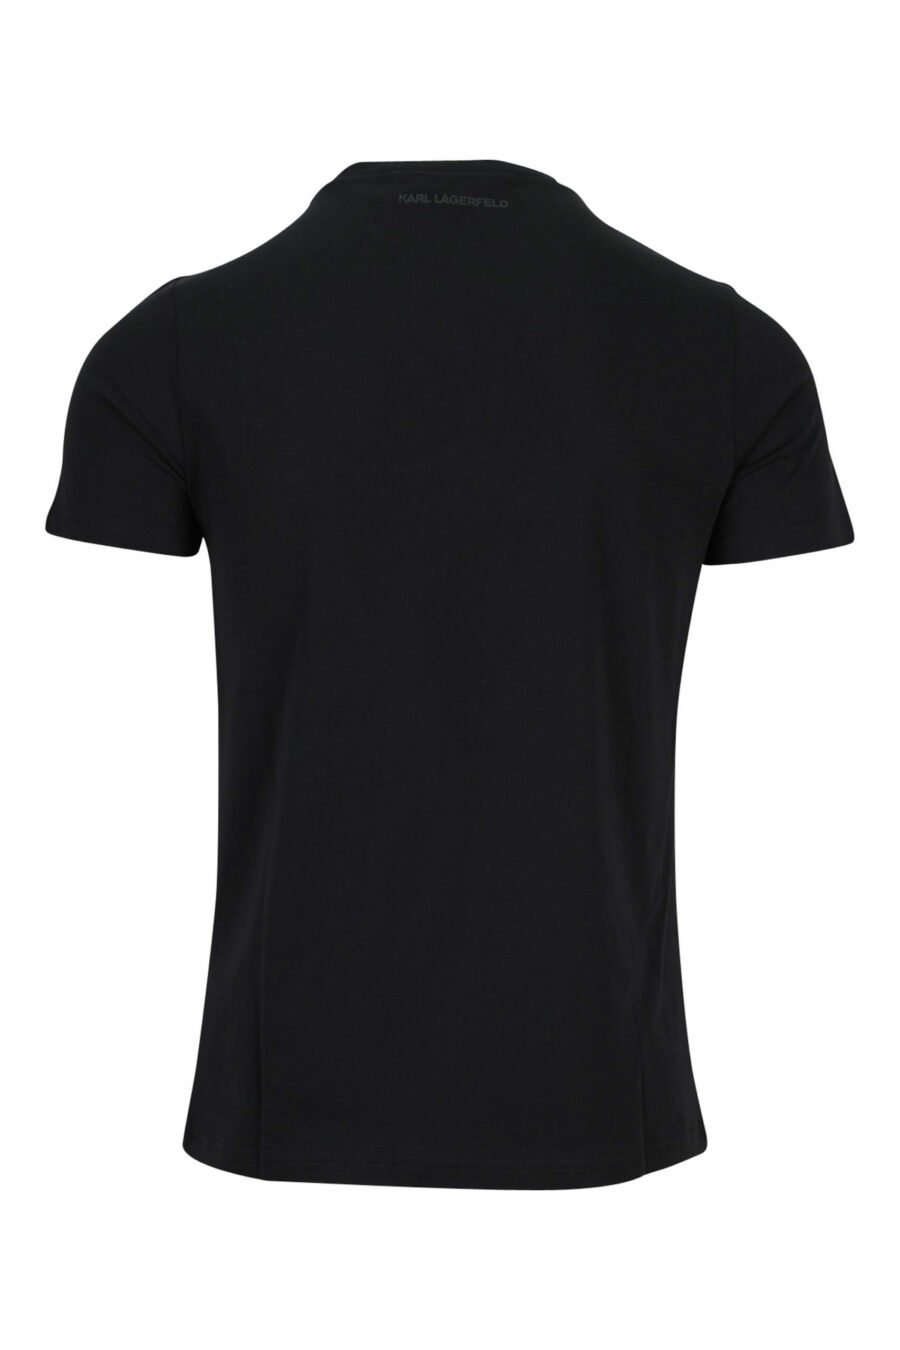 Black round neck T-shirt with "karl" maxilogo - 4062225535398 1 scaled